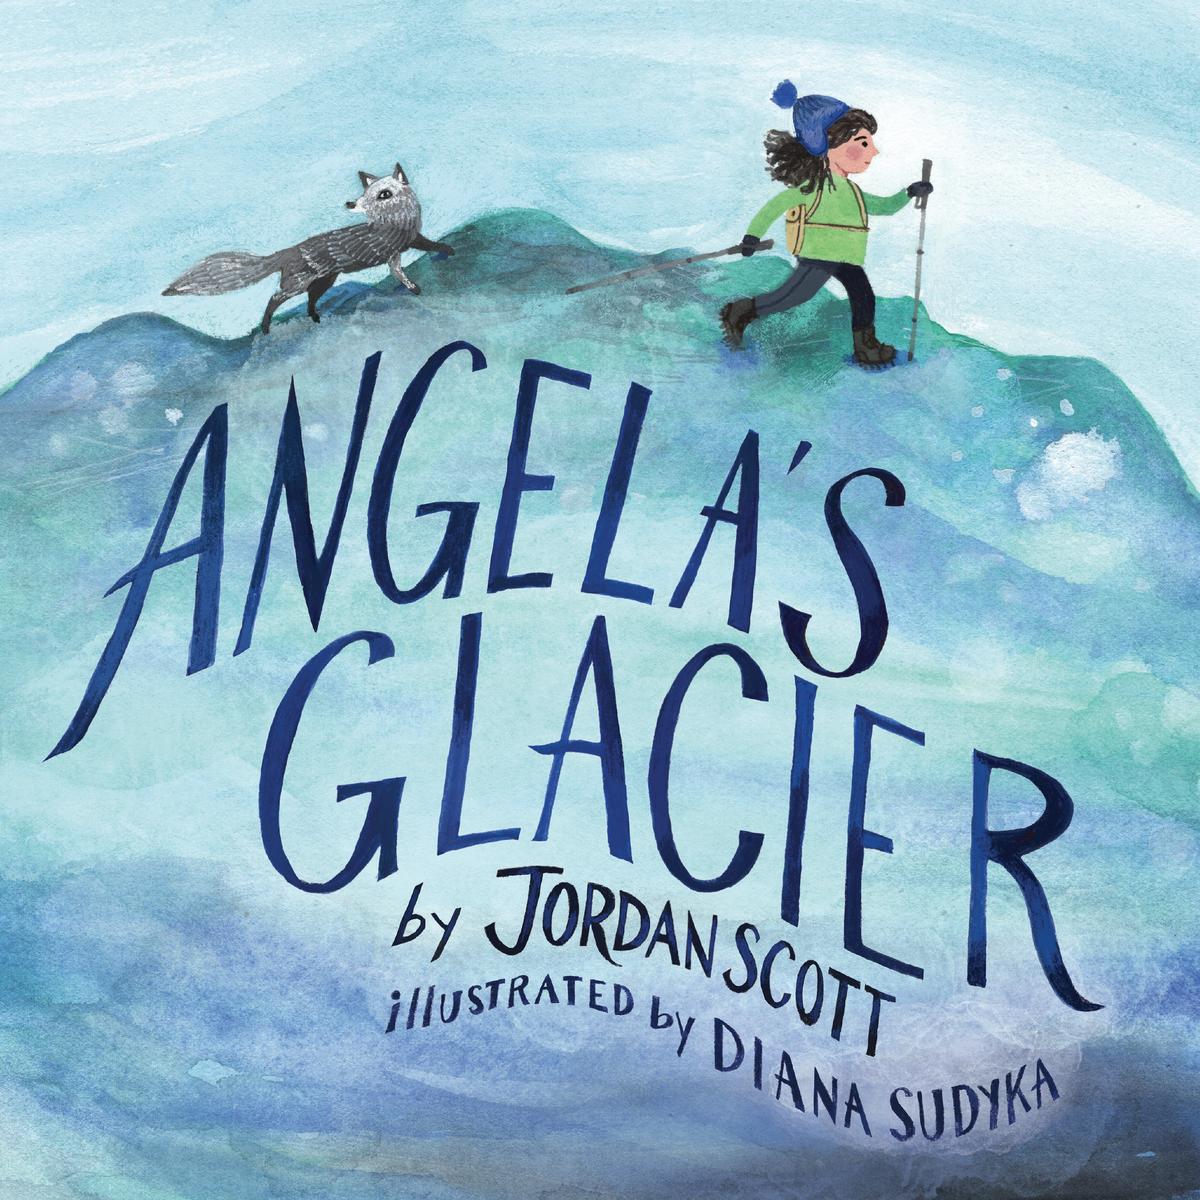 Angela's Glacier - 